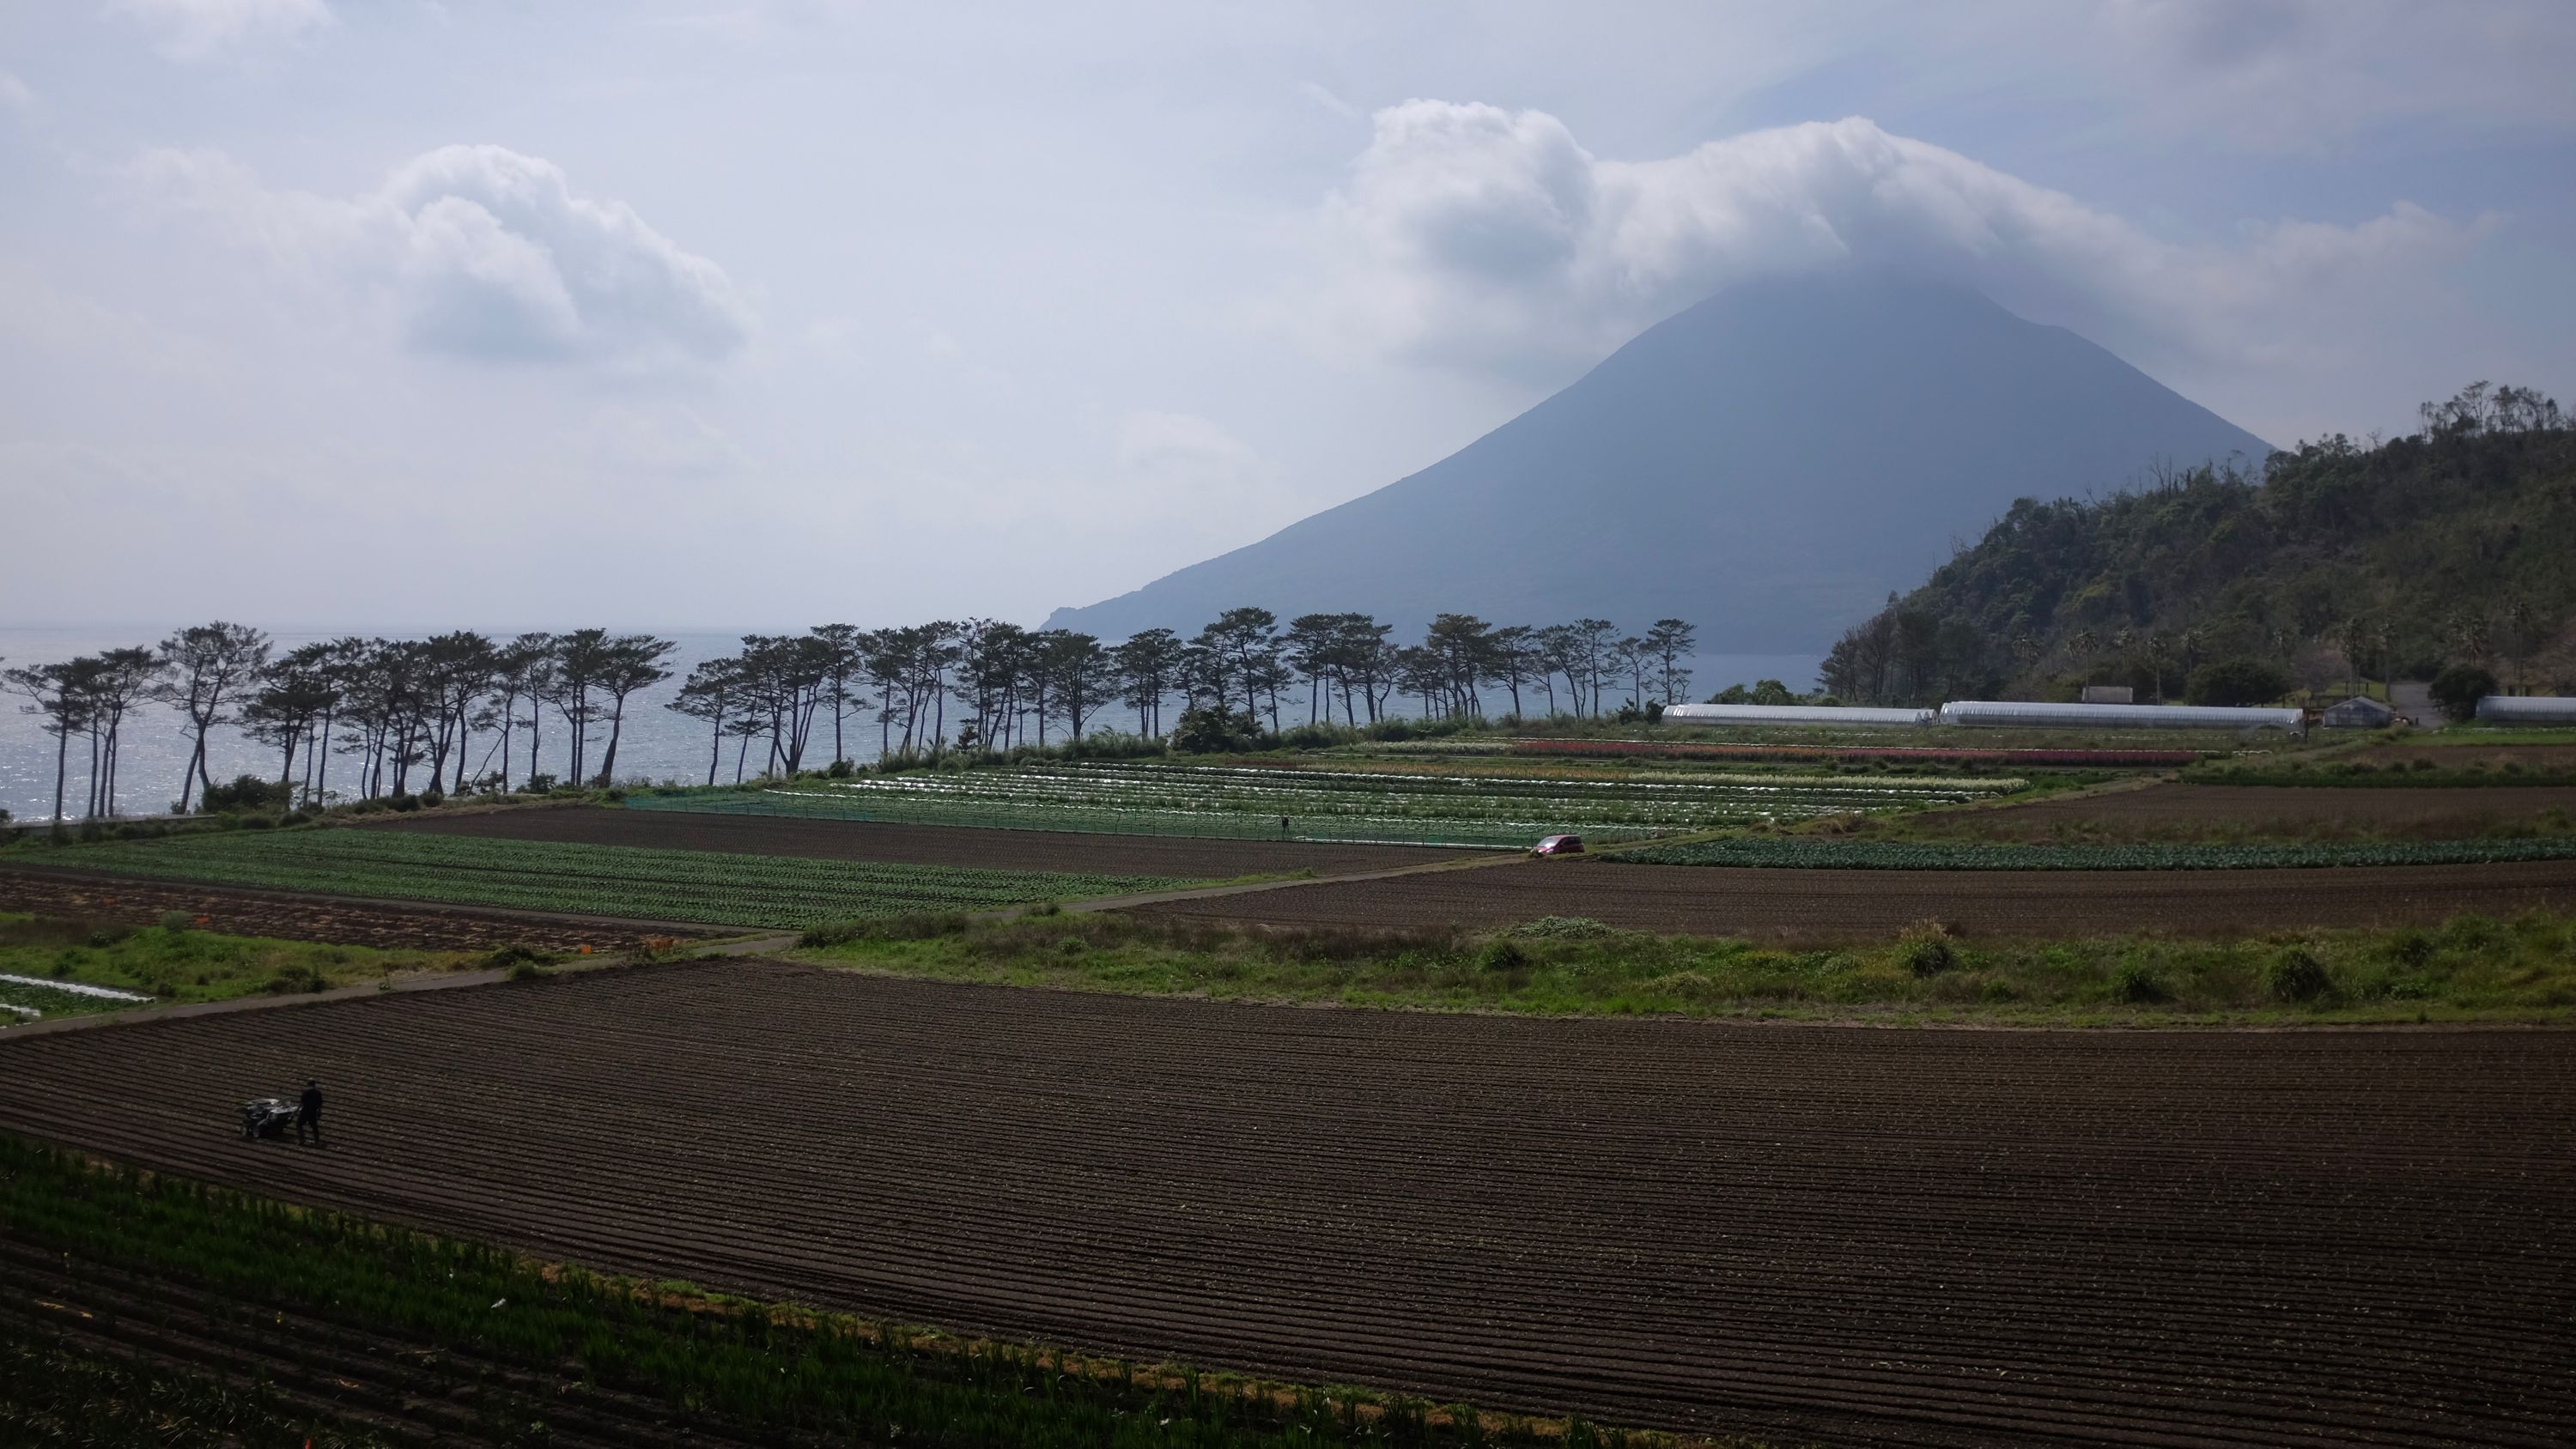 Mount Kaimon seen from across some fields.